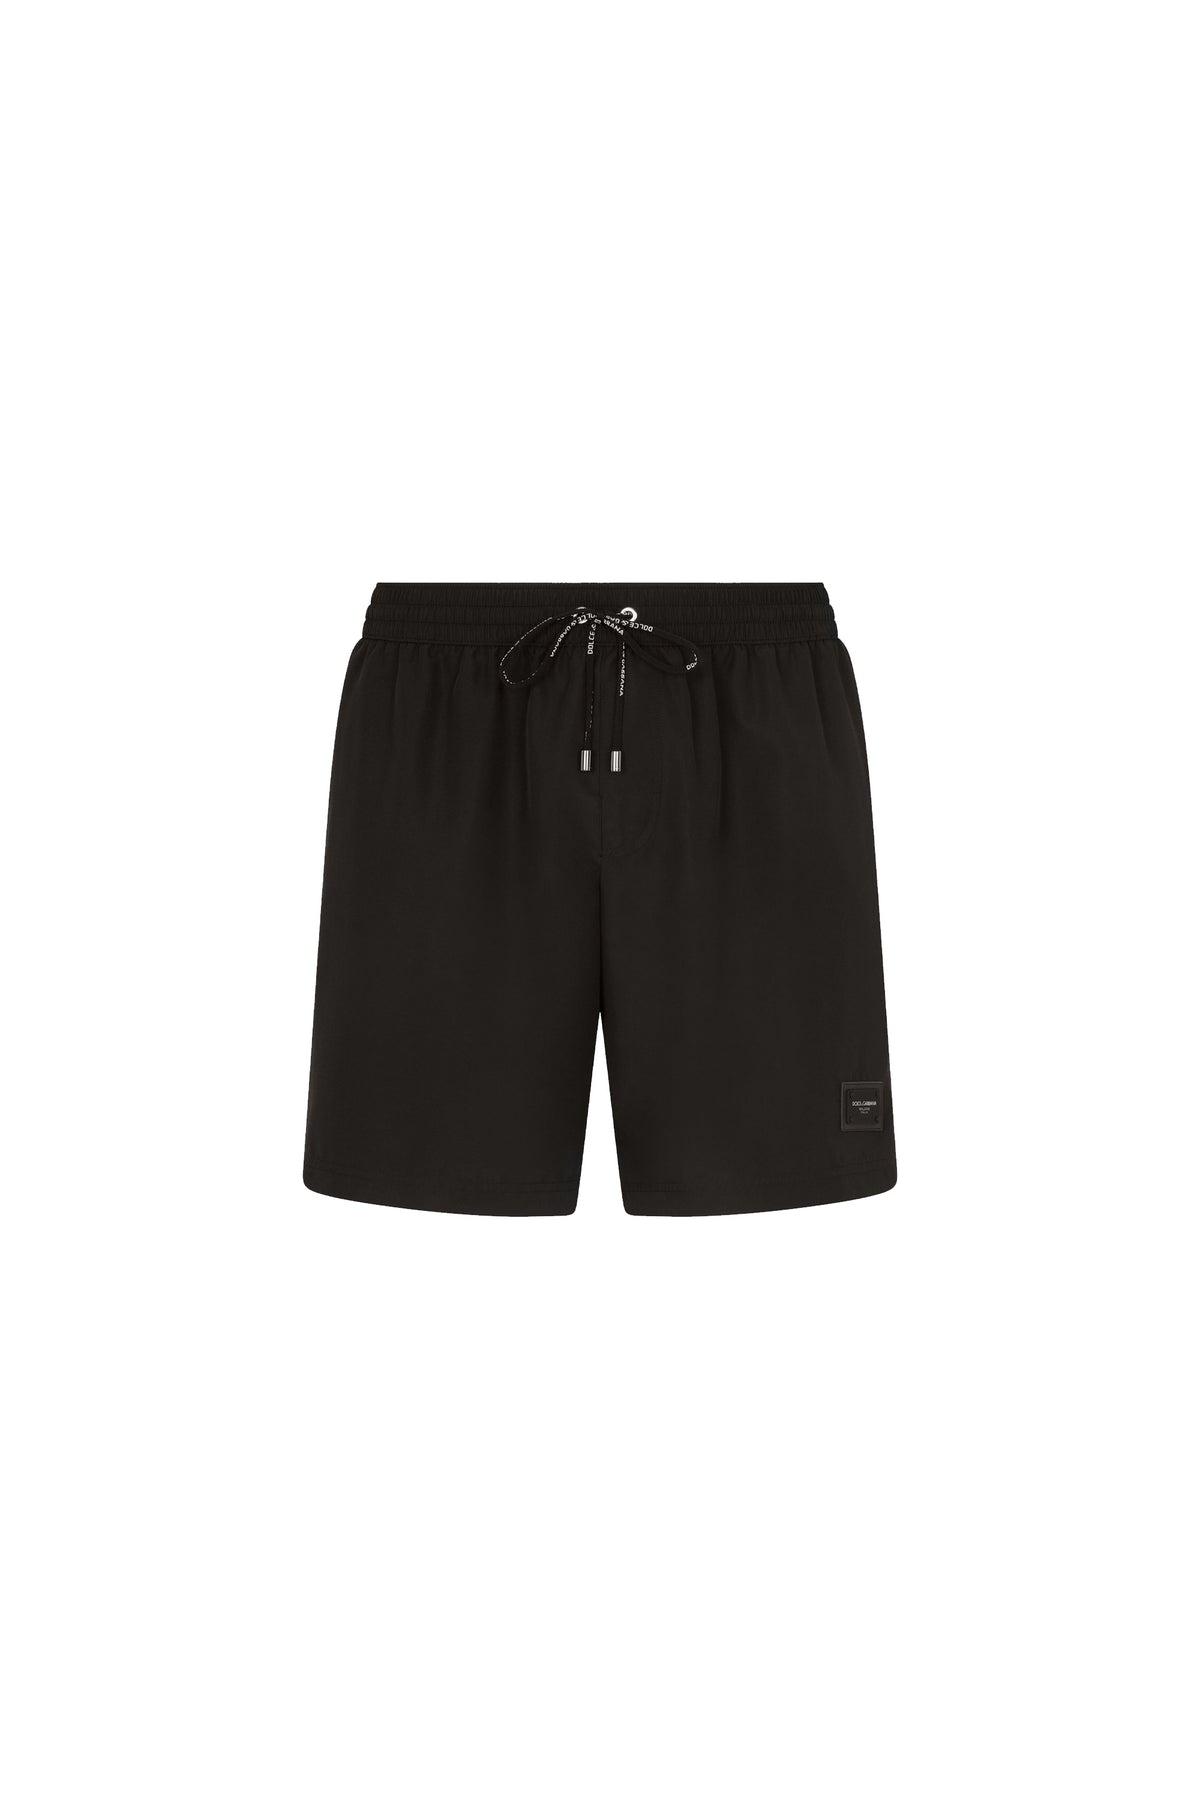 Dolce & Gabbana Swim Shorts Black Plate